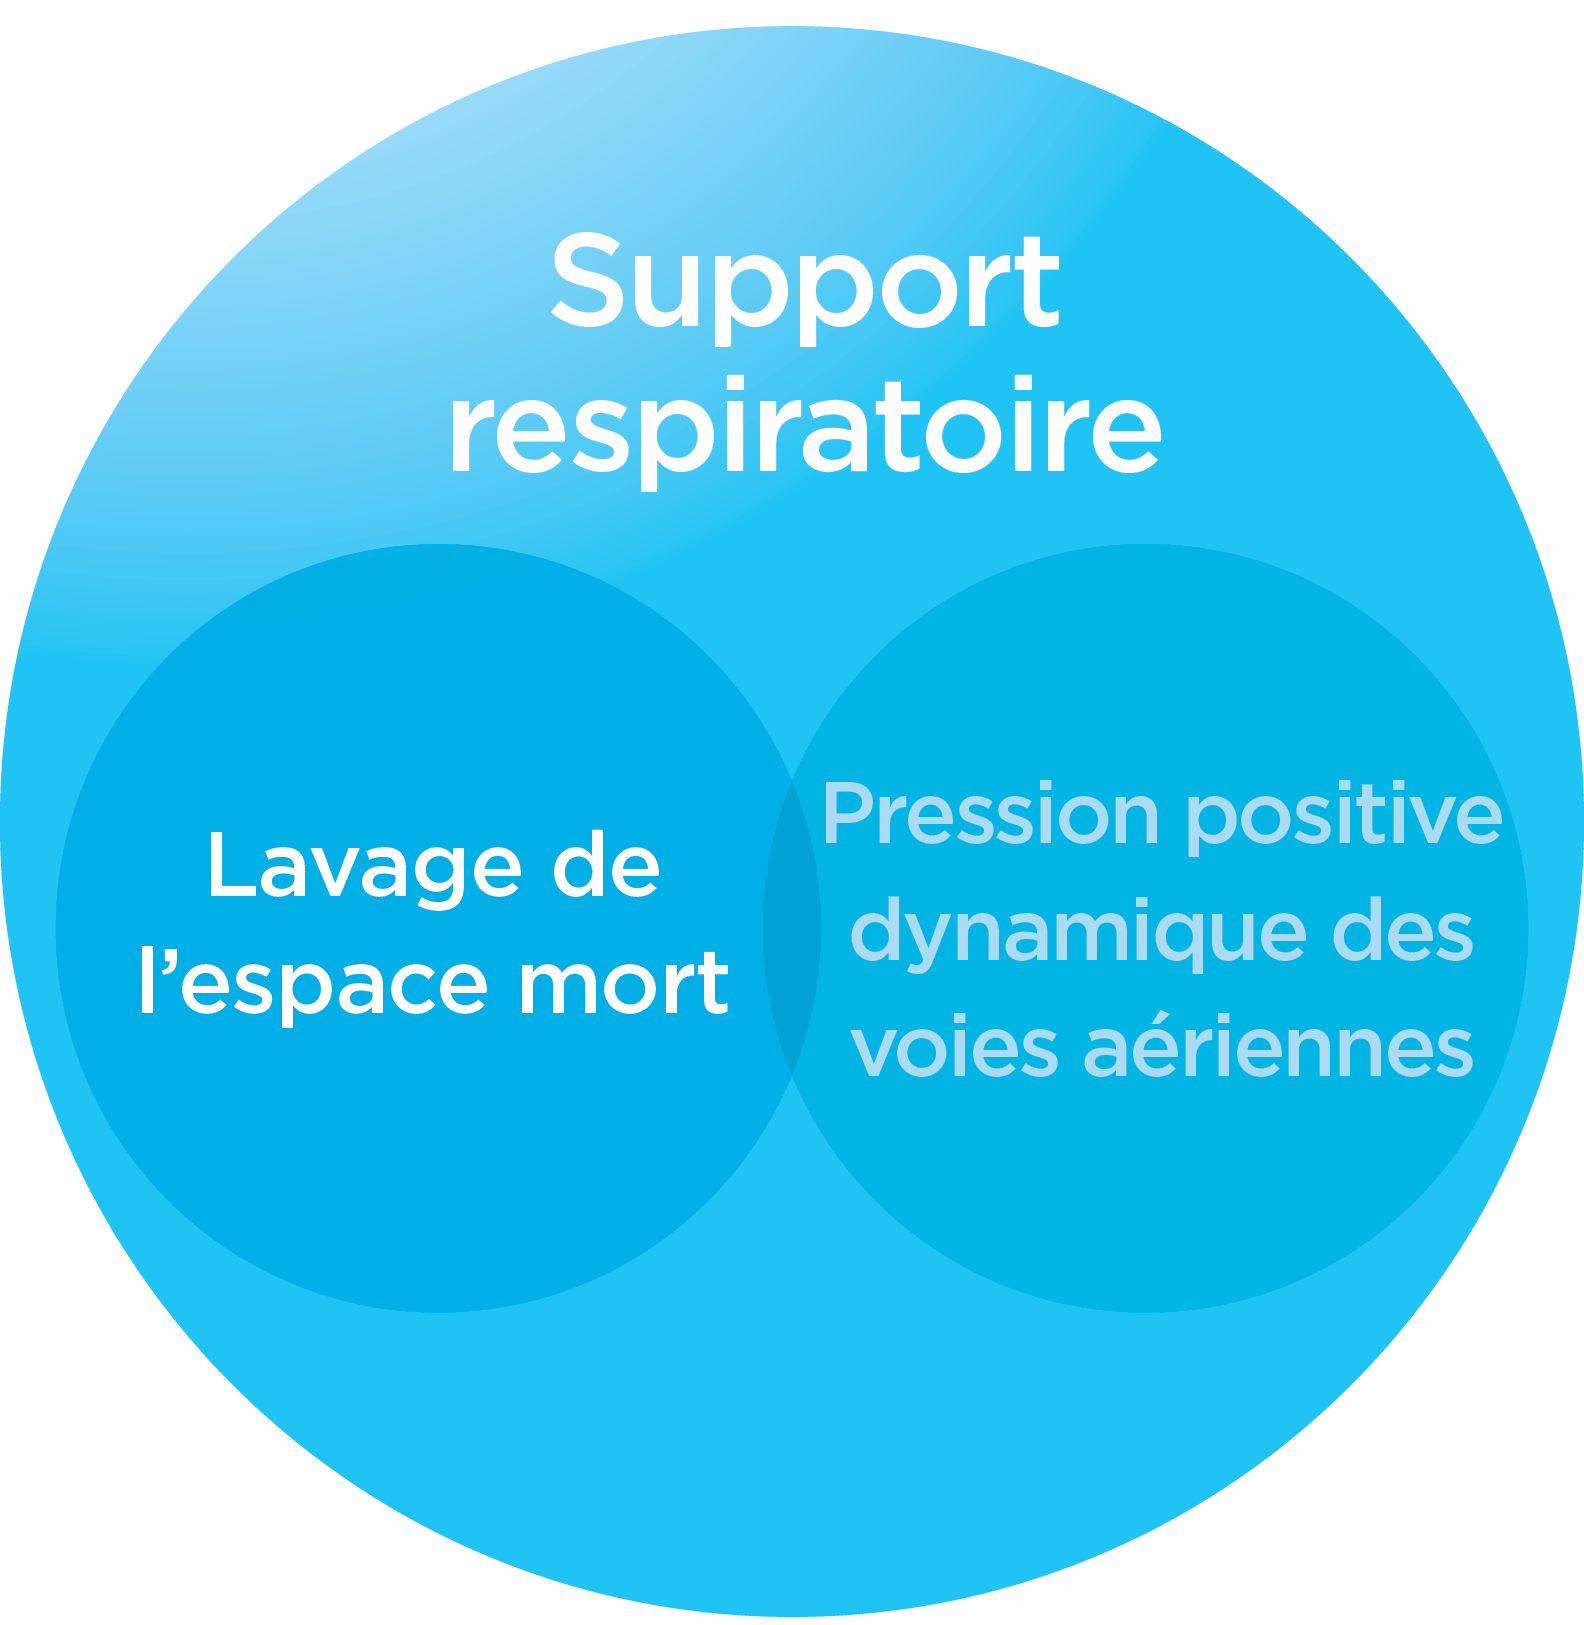 Respiratory support